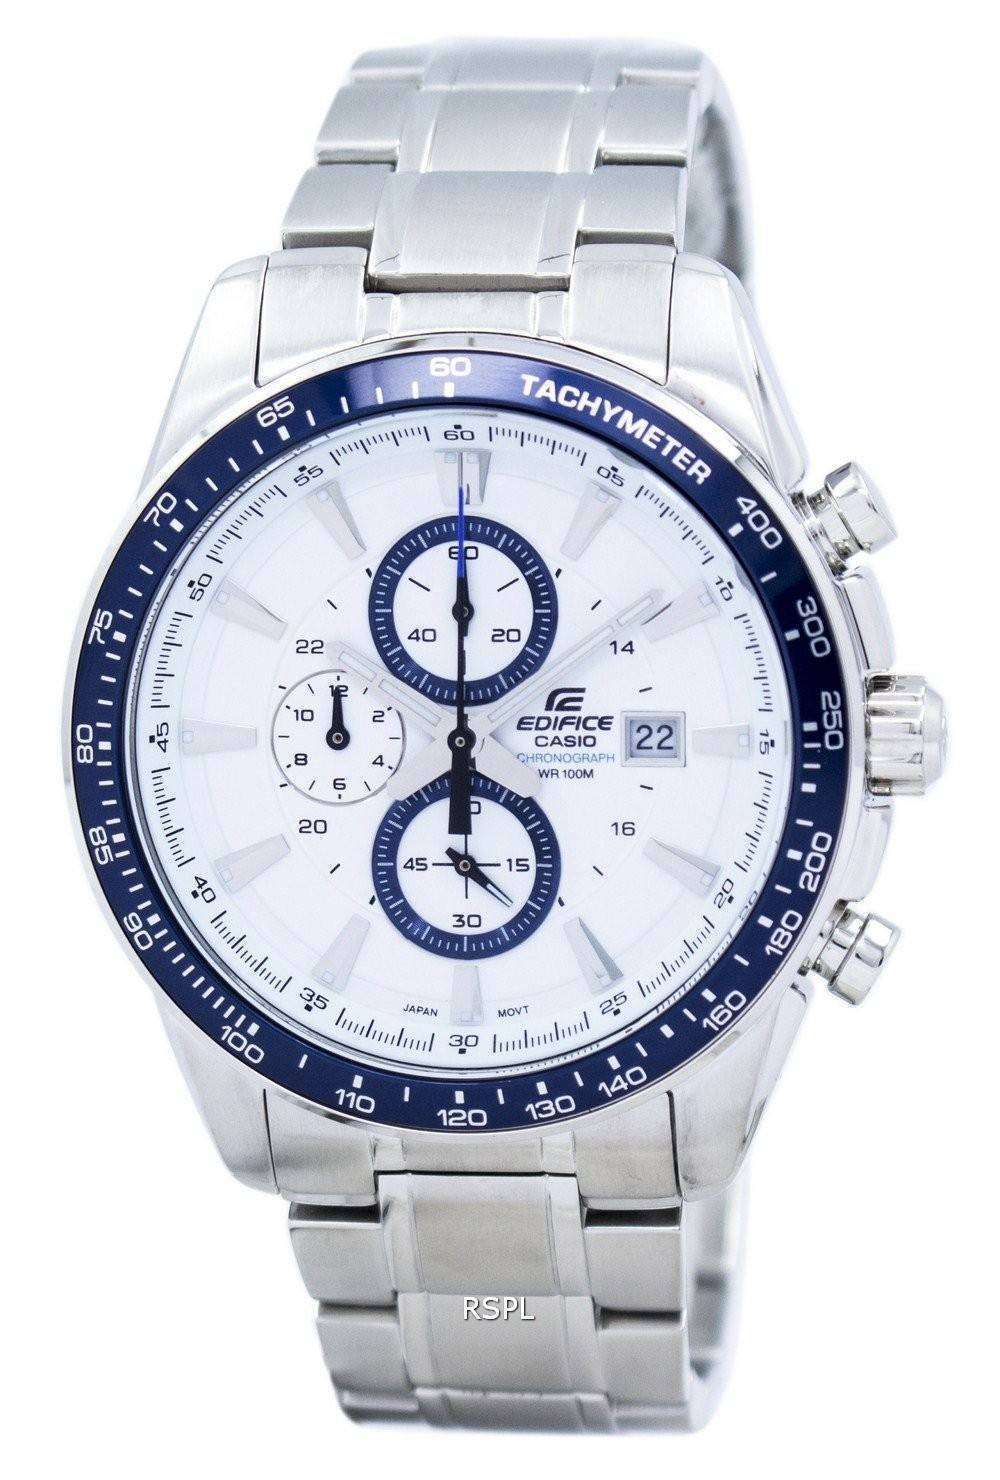 Casio Edifice Chronograph EF-547D-7A2V Men's Watch